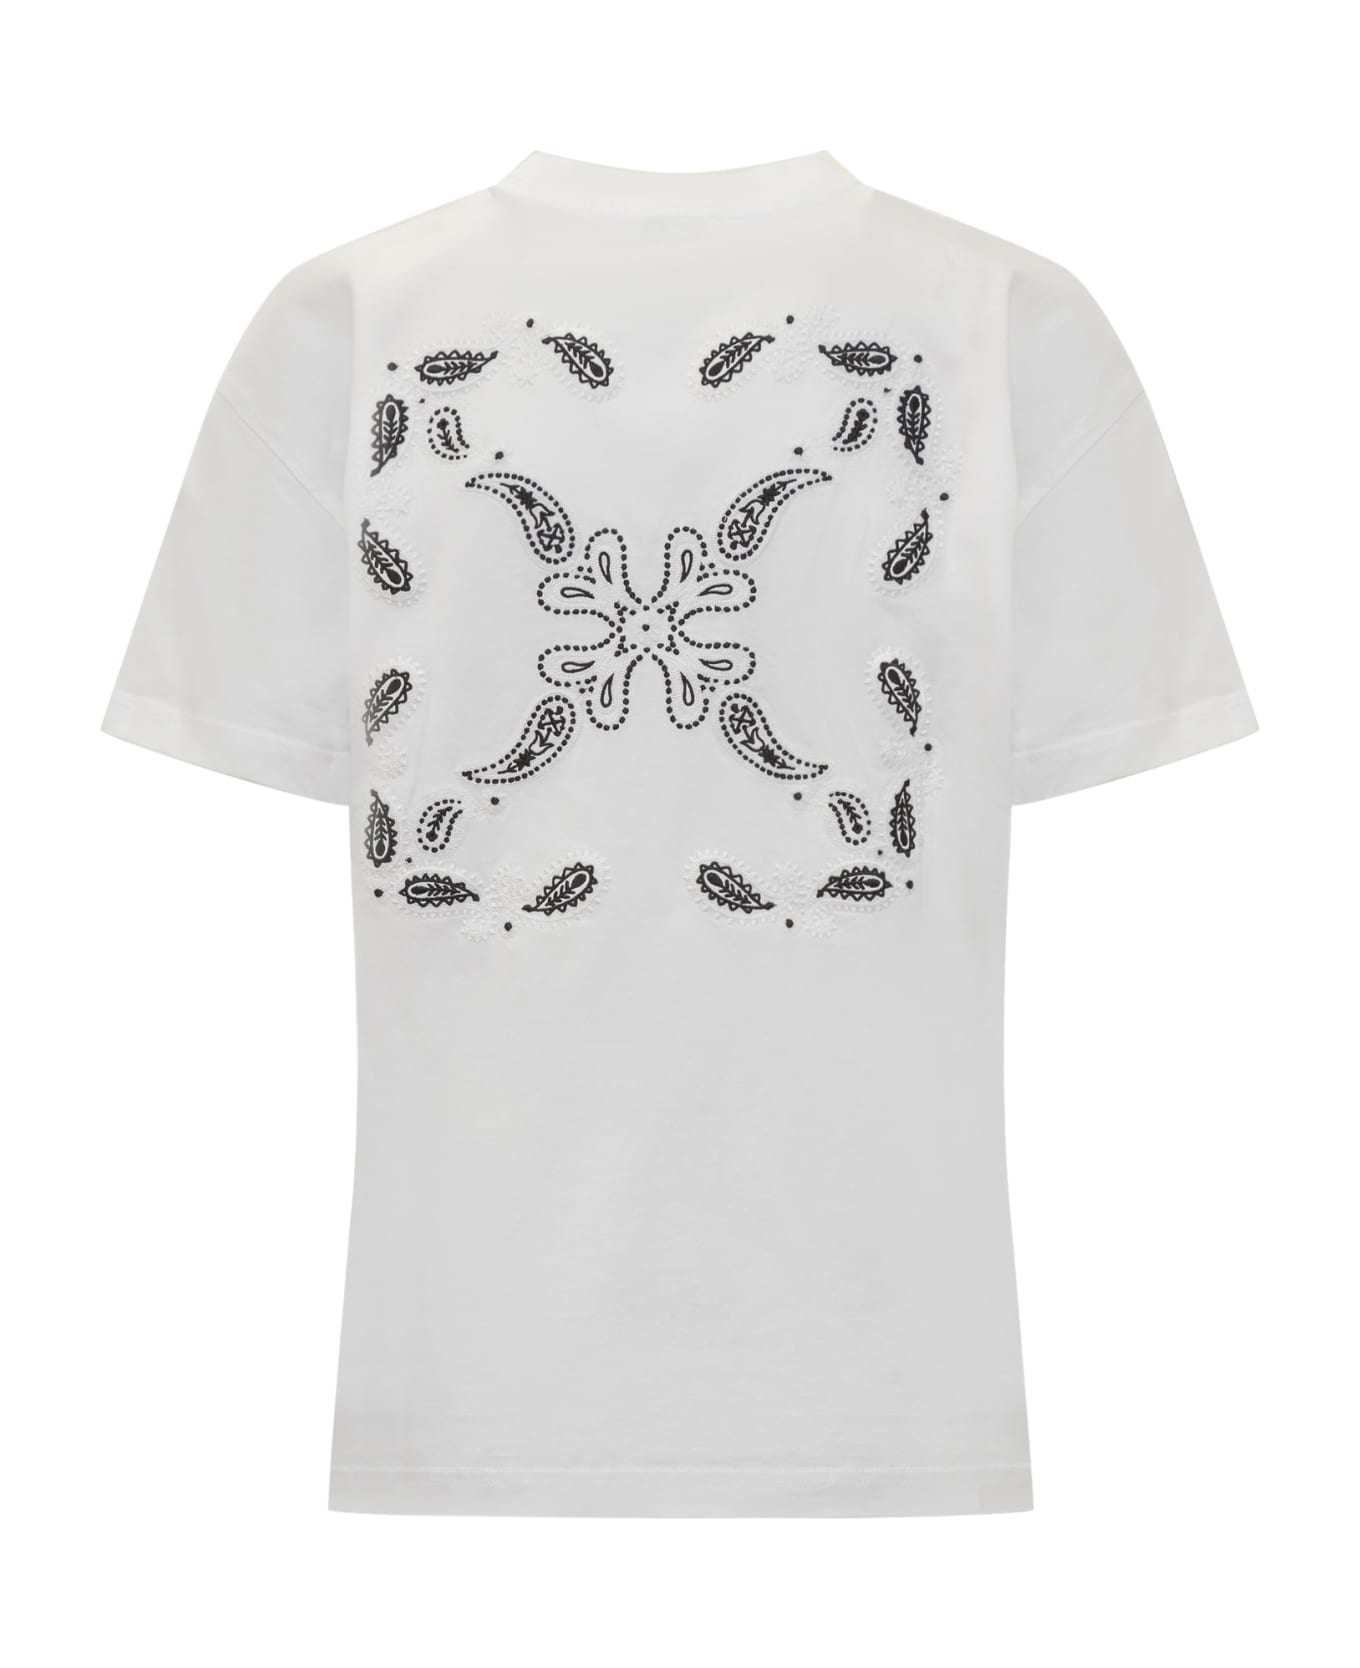 Off-White Arrow Bandana Cotton T-shirt - White Tシャツ